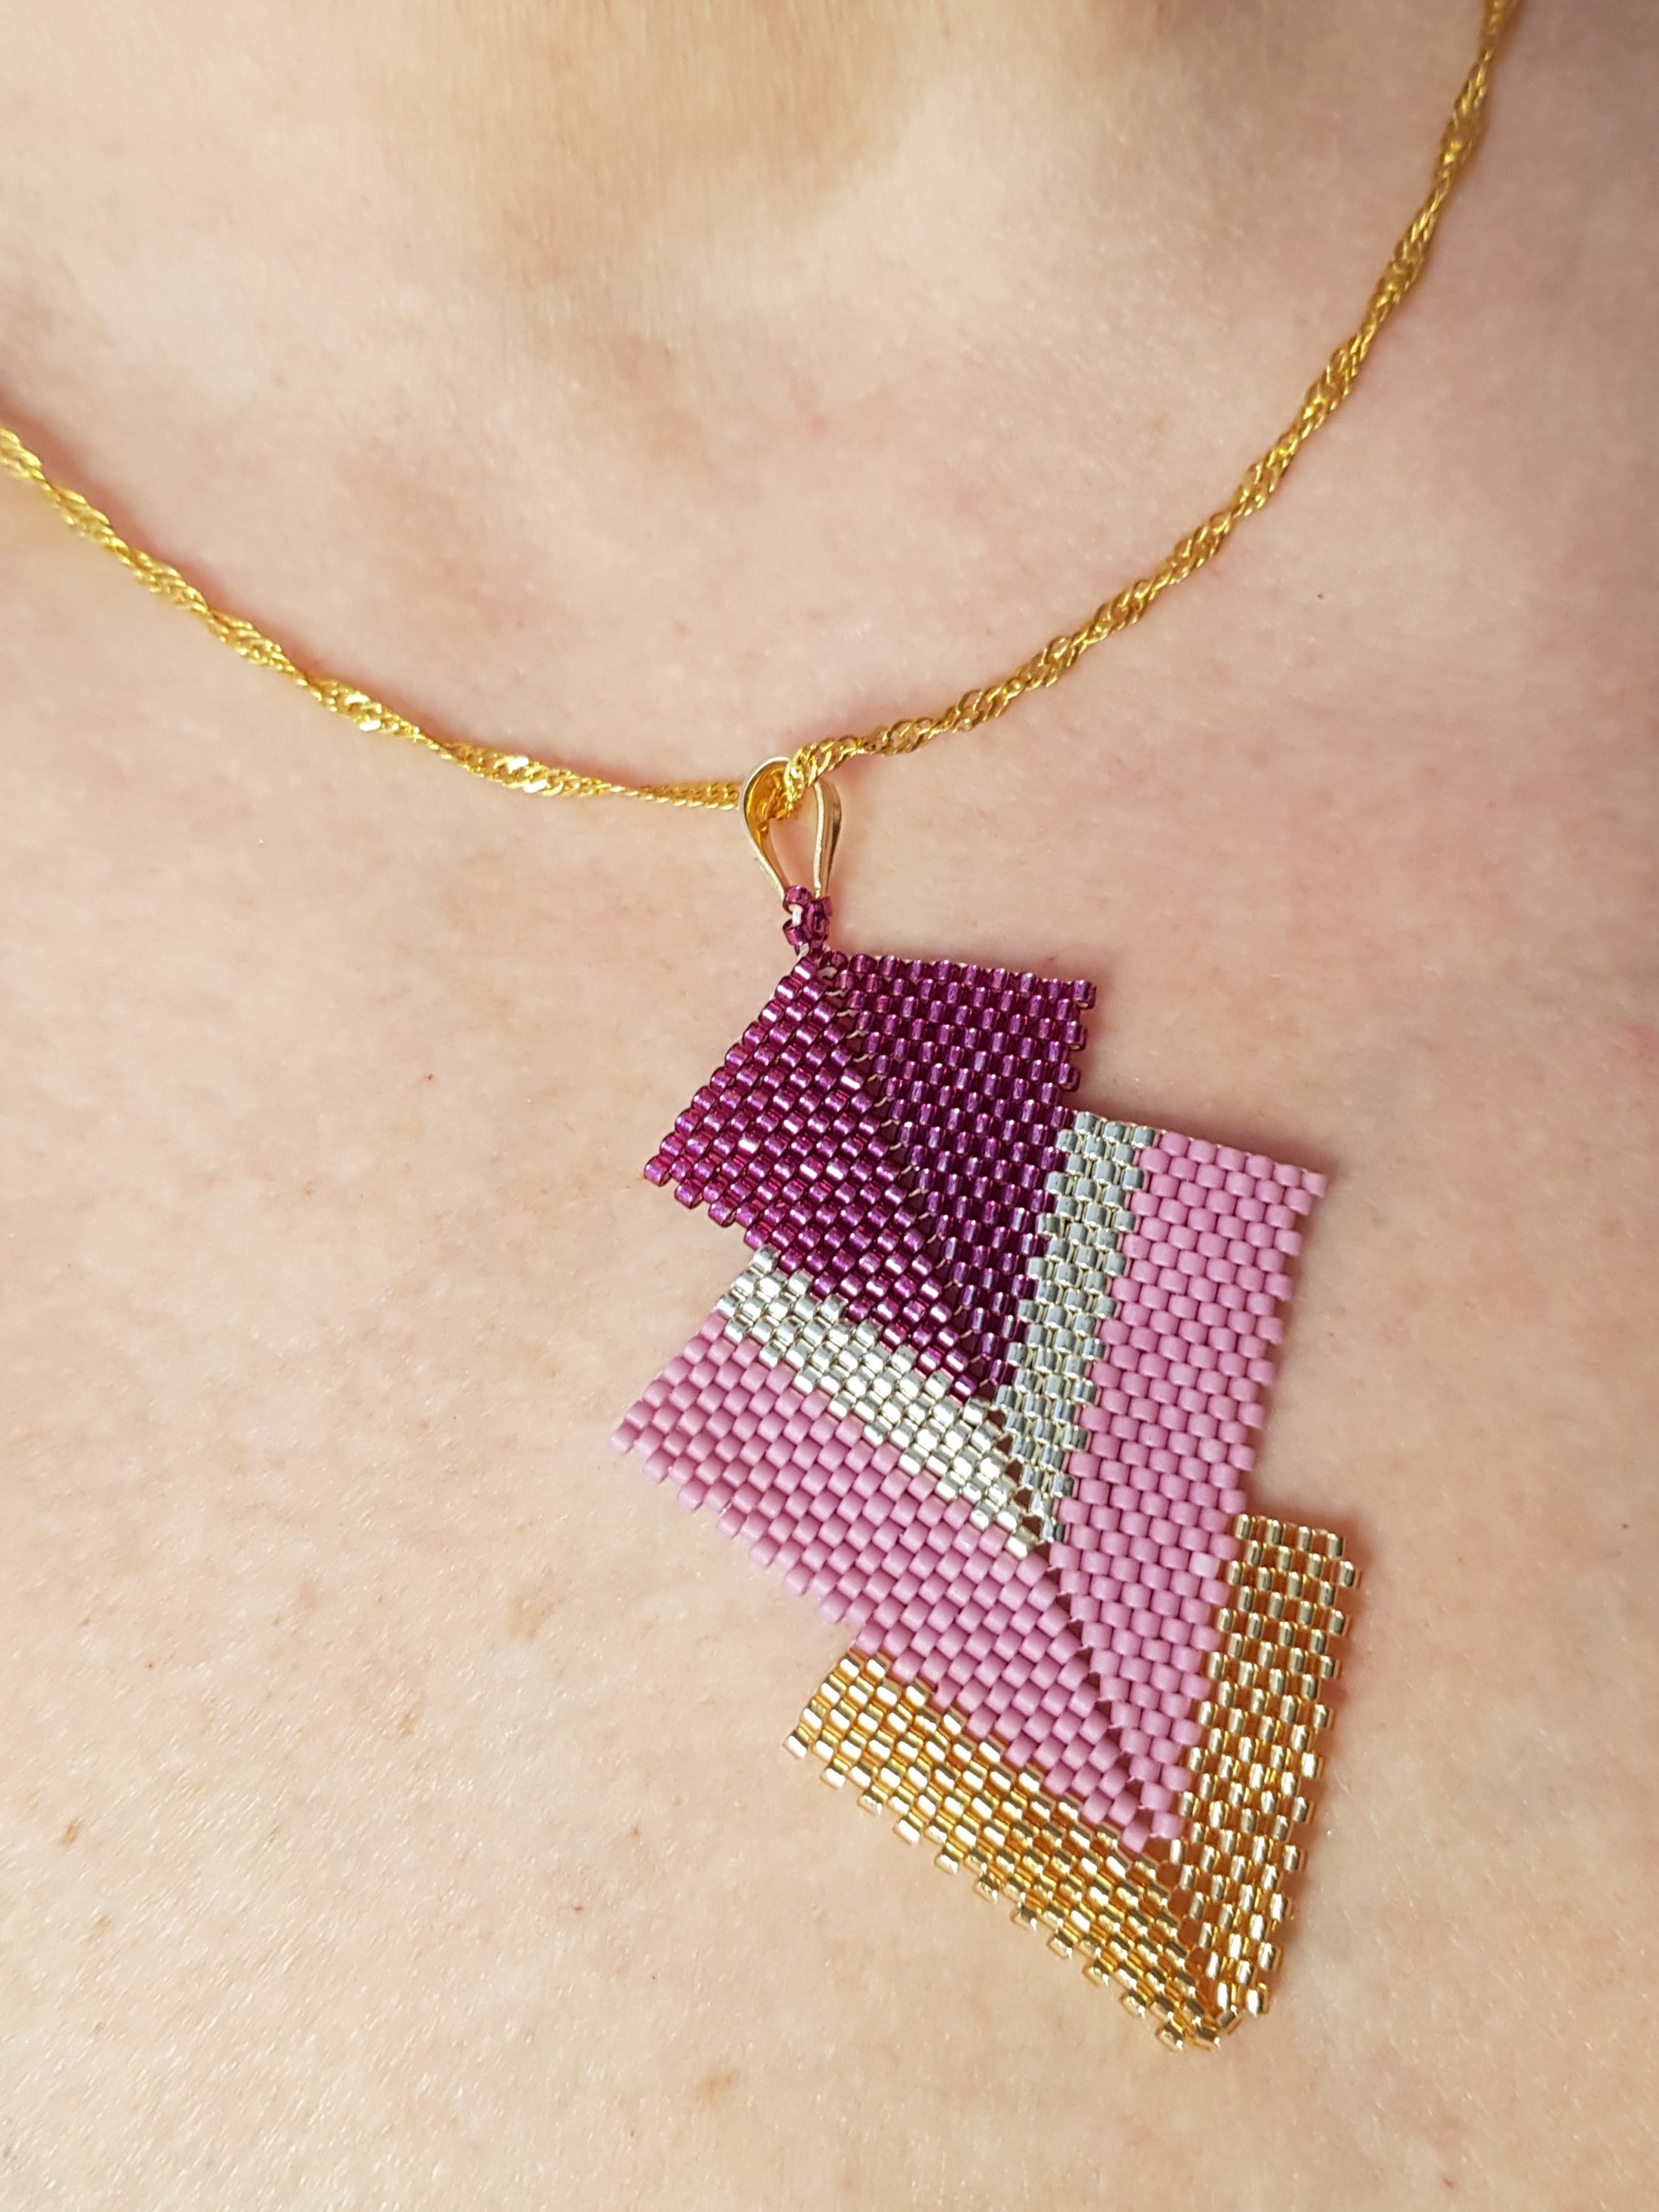 Zelda - Necklace with particular pendant